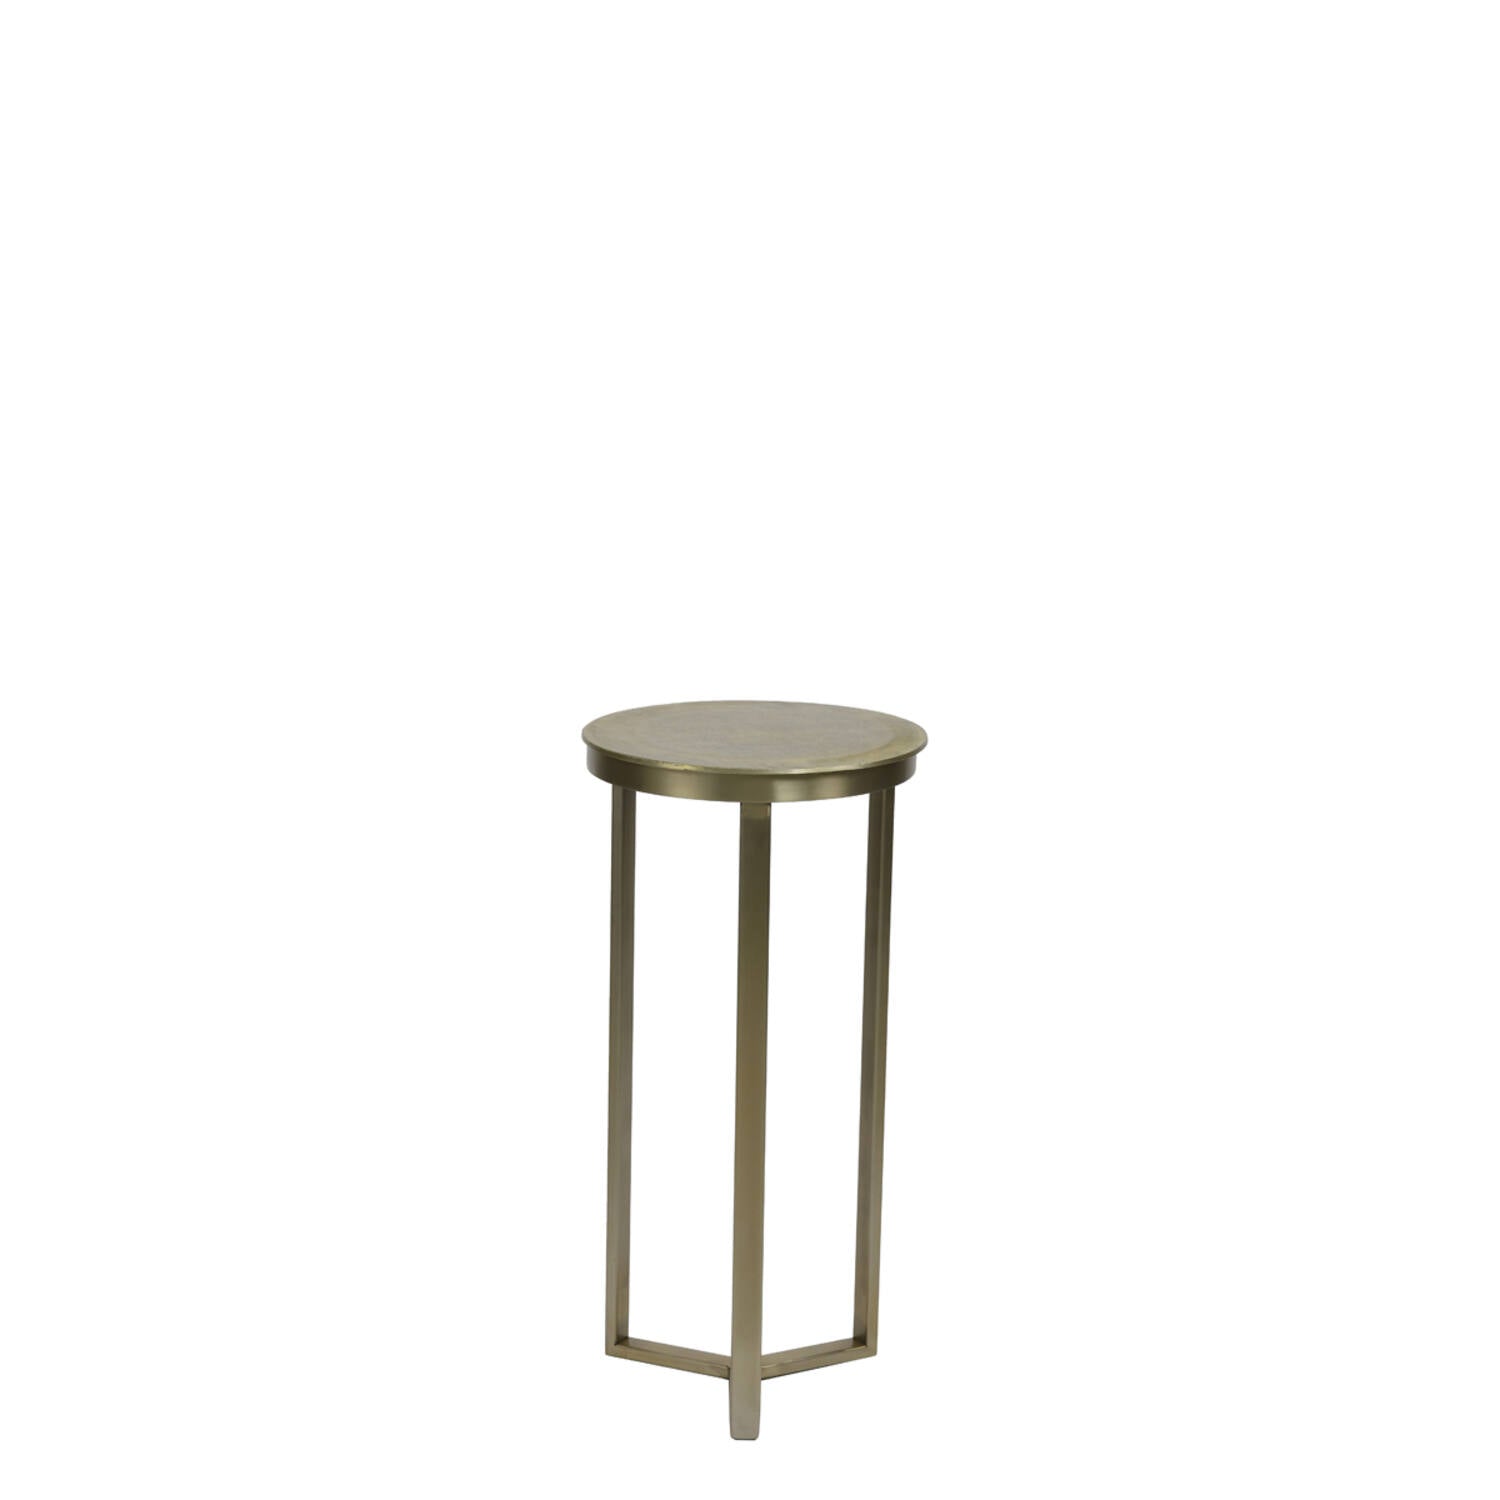 Retiro Small Pillar Side Tables - Light Gold Finish